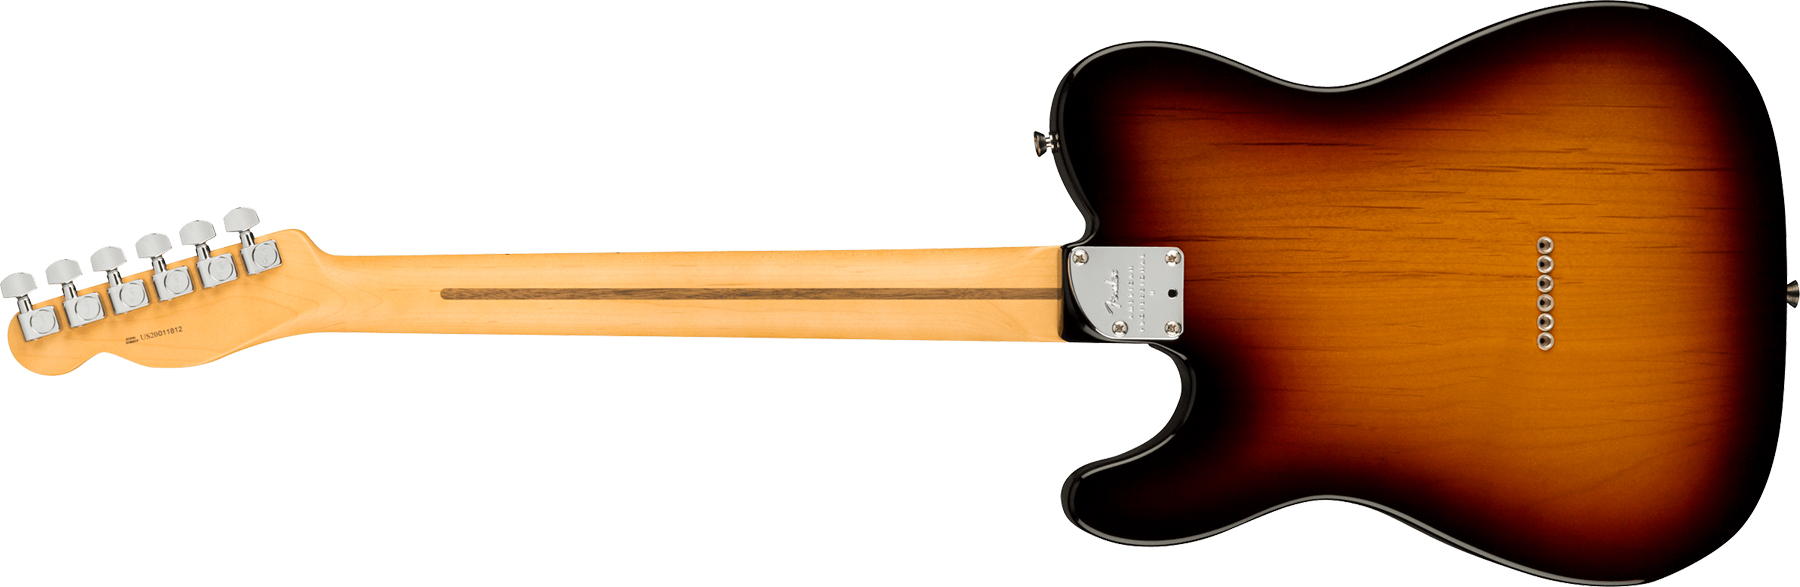 Fender Tele American Professional Ii Usa Rw - 3-color Sunburst - E-Gitarre in Teleform - Variation 1